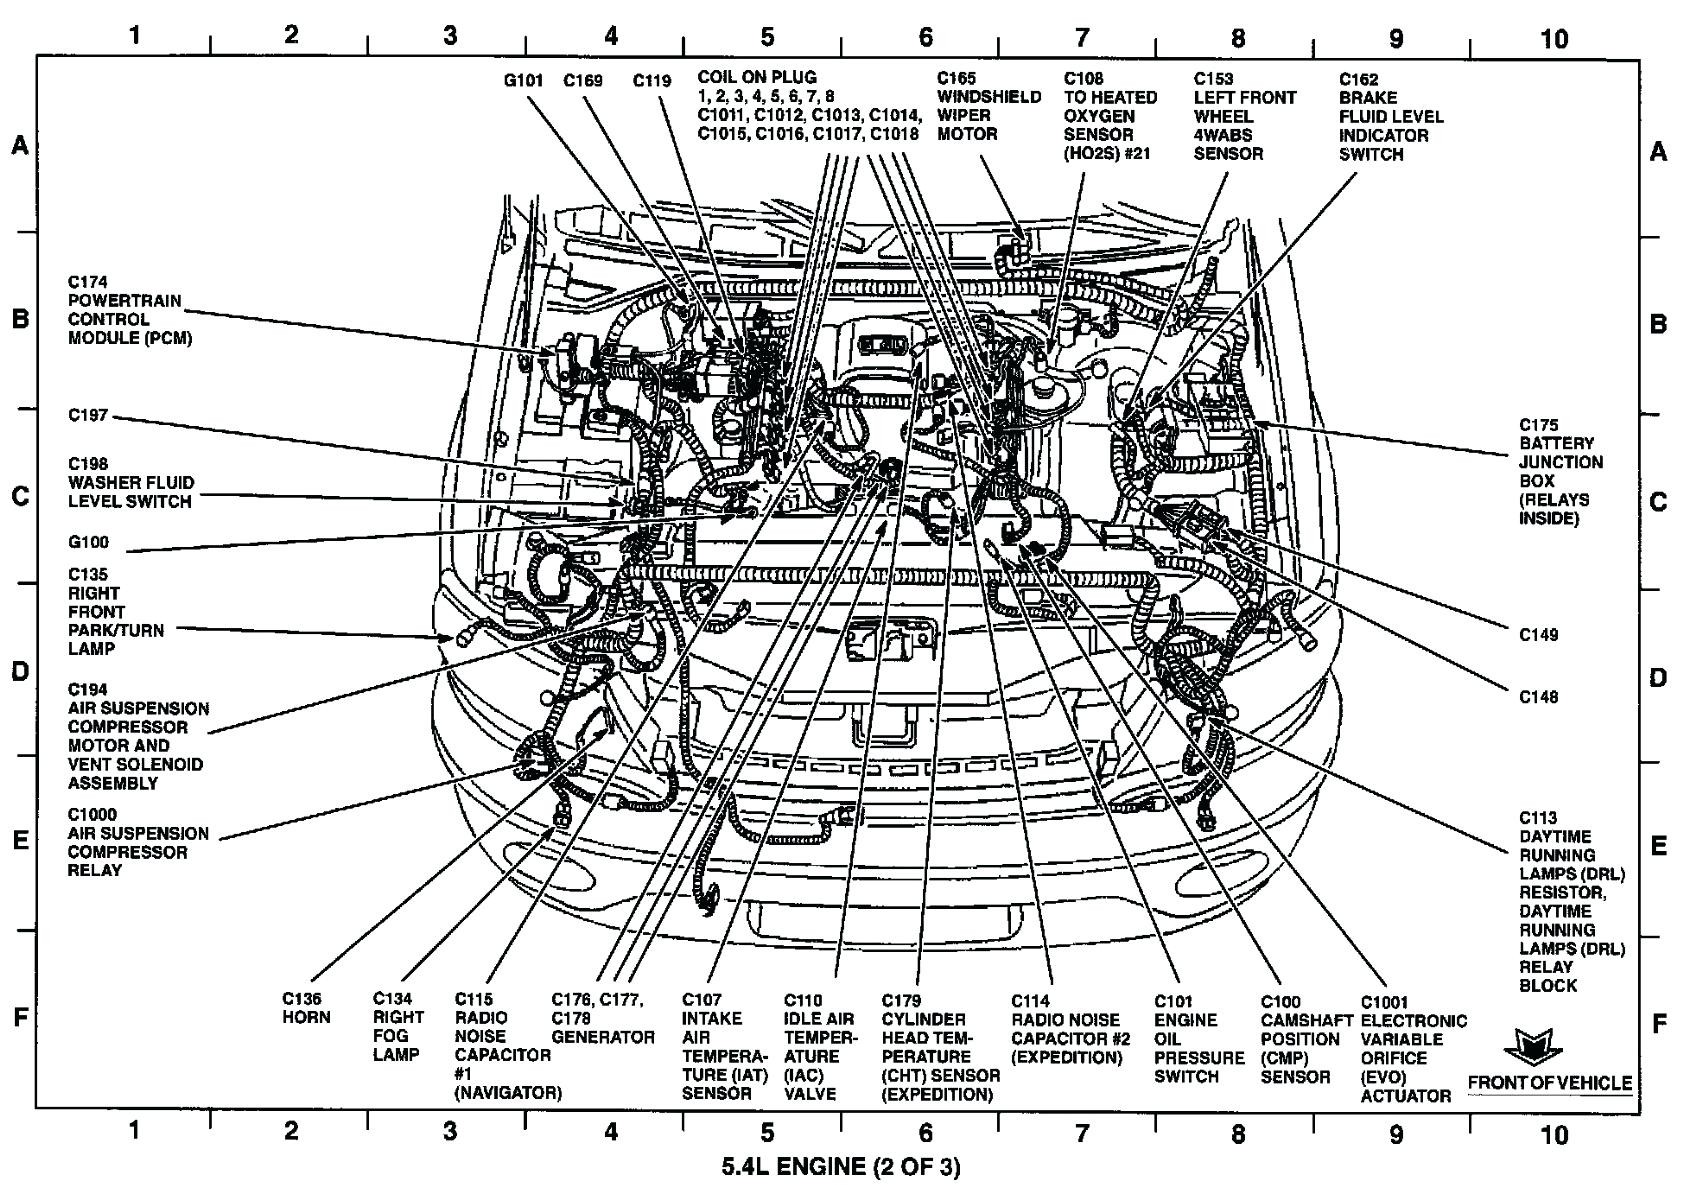 2001 ford Escape Engine Diagram ford V6 3 7 Engine Diagram Of 2001 ford Escape Engine Diagram